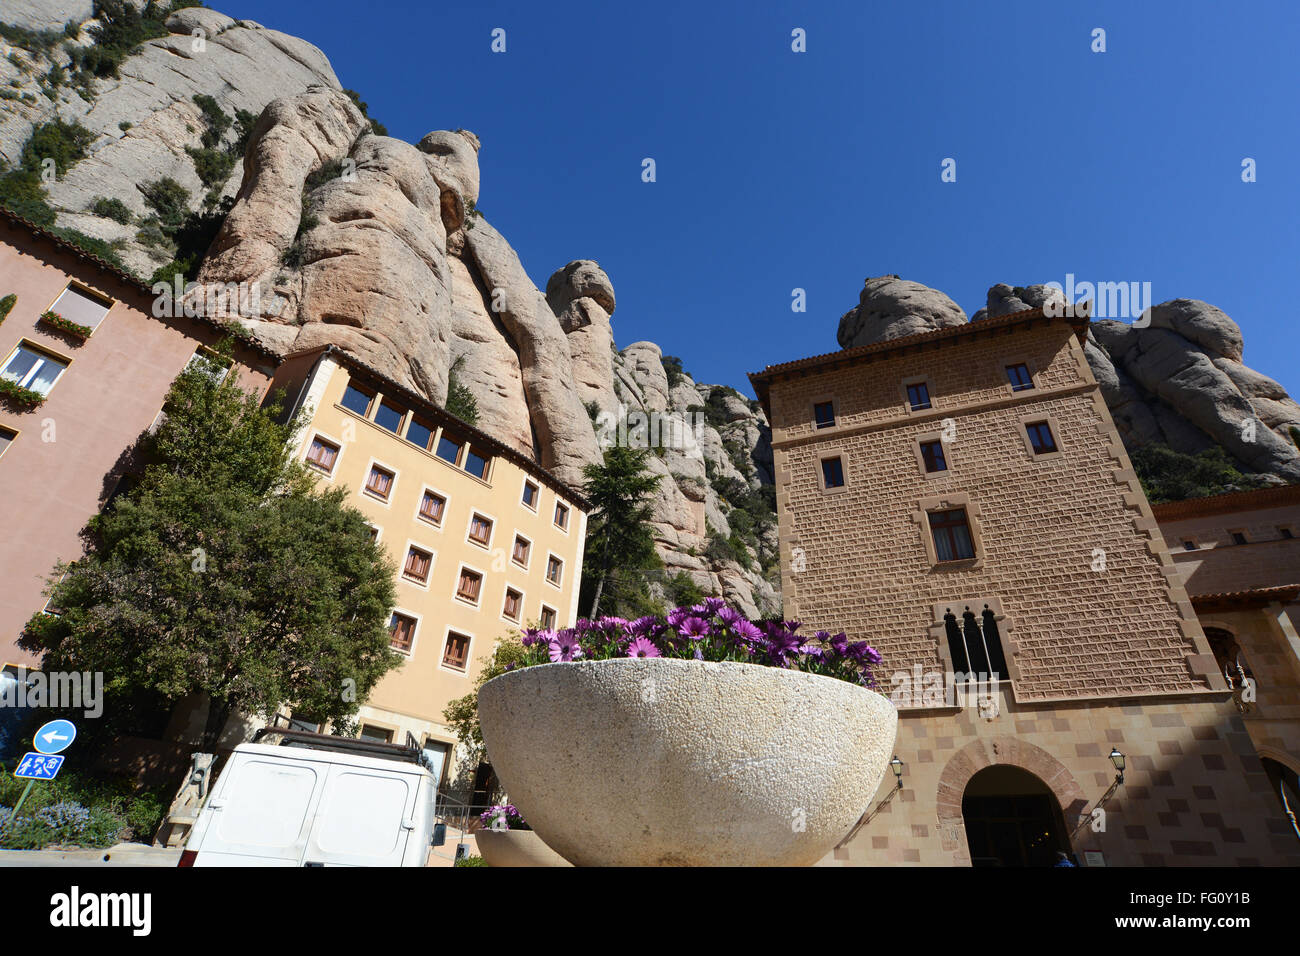 Montserrat monastery near Barcelona, Spain. Stock Photo